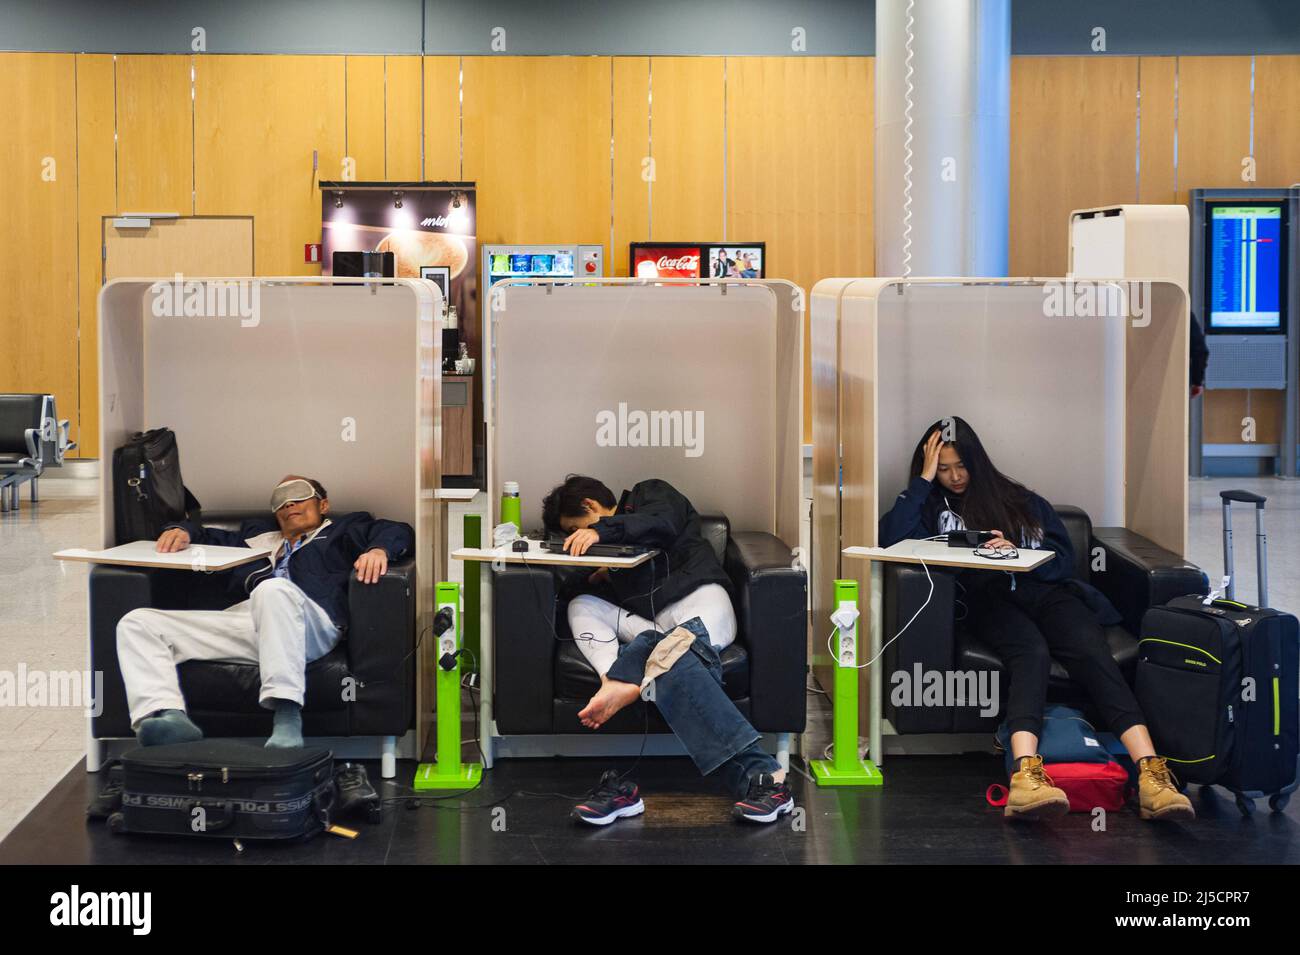 10.06.2016, Helsinki, Finland, Europe - Passengers wait at Helsinki-Vantaa International Airport for their departure flight to Asia. [automated translation] Stock Photo